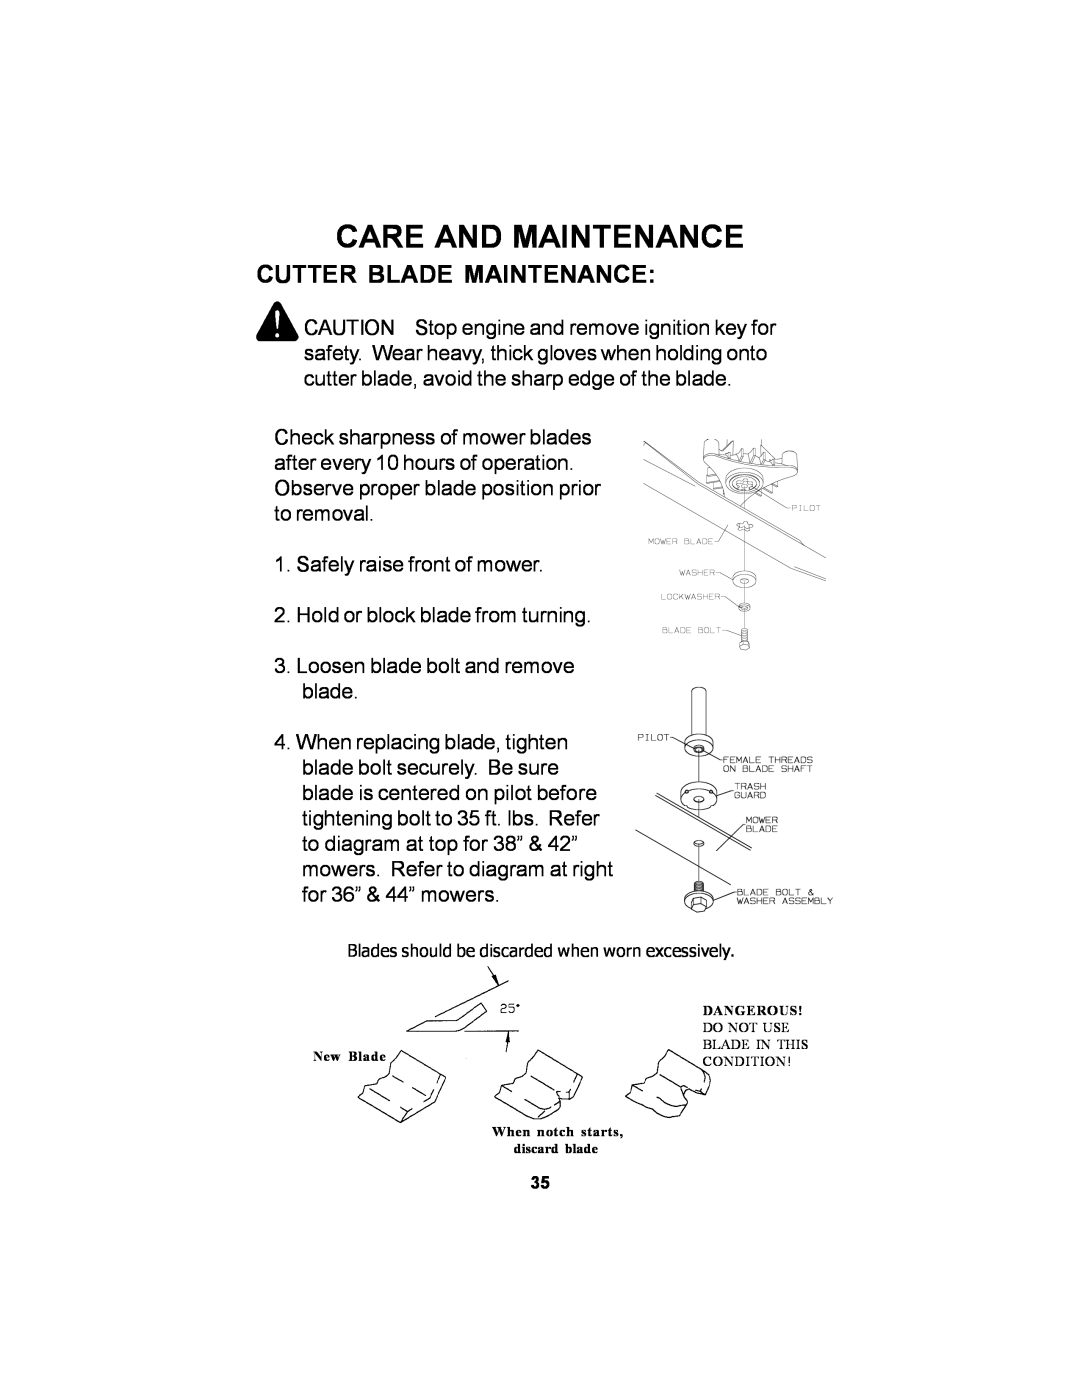 Dixon 36 manual Cutter Blade Maintenance, Care And Maintenance 